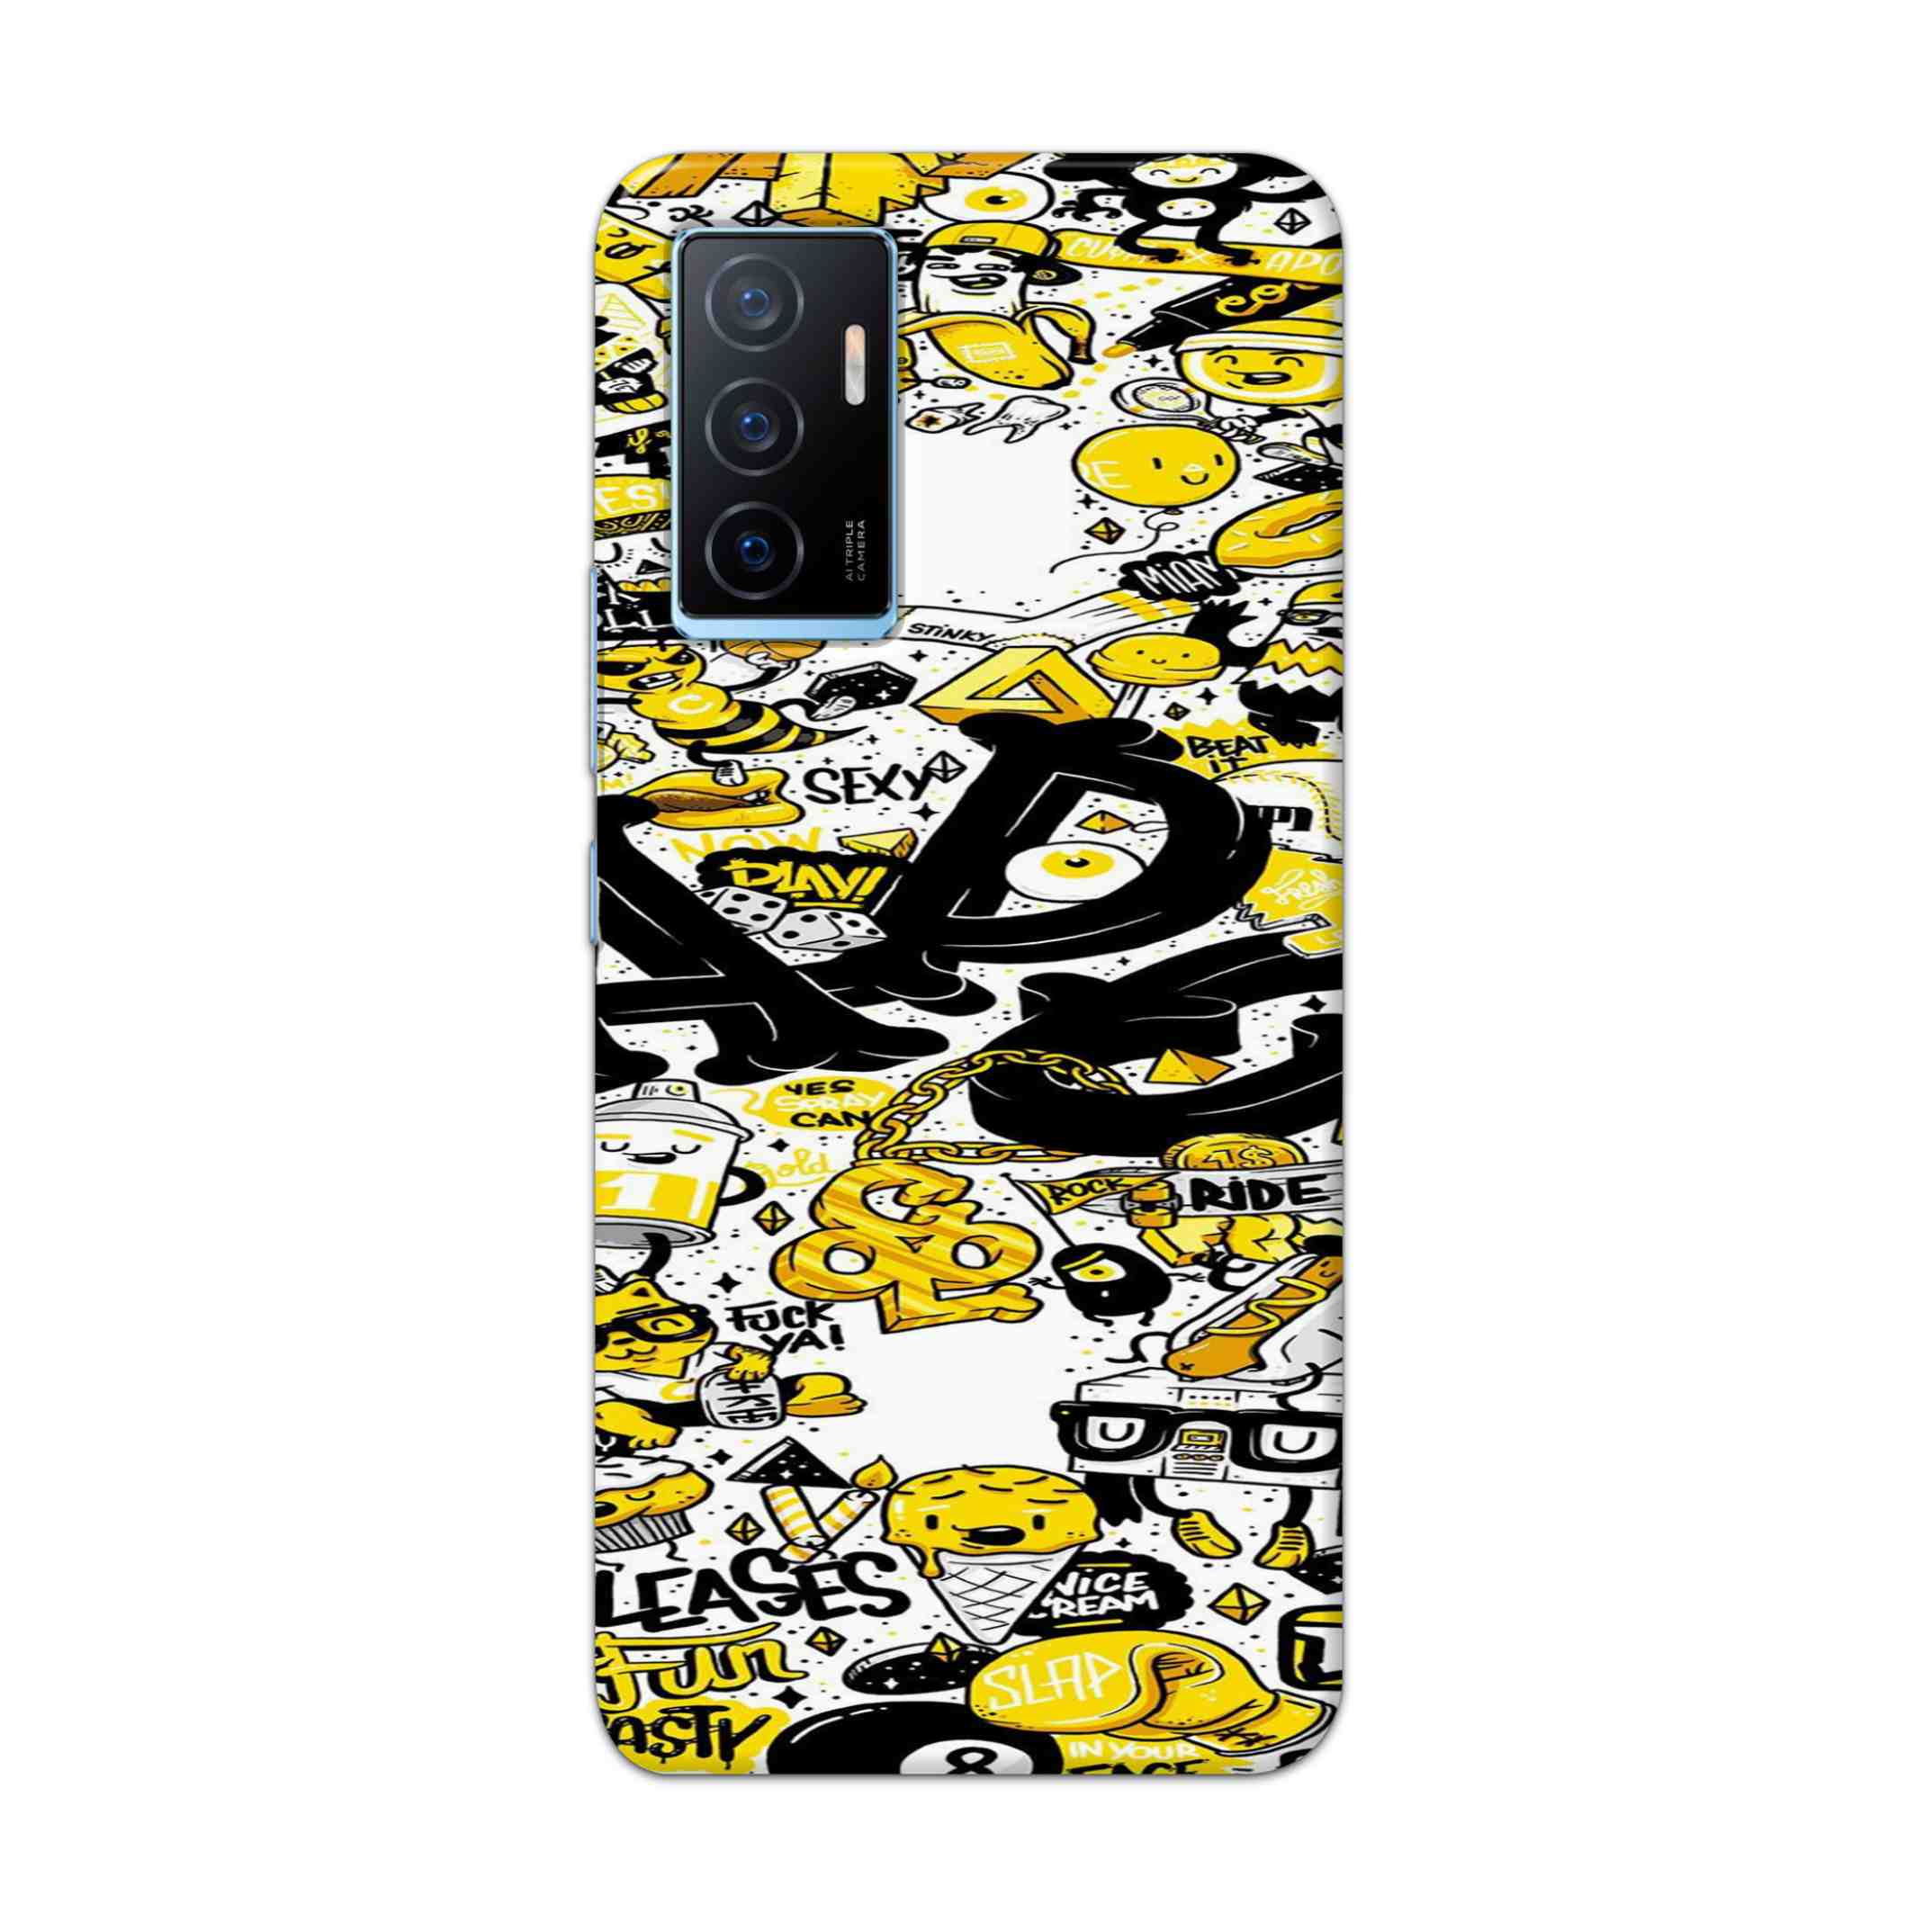 Buy Ado Hard Back Mobile Phone Case Cover For Vivo Y75 4G Online